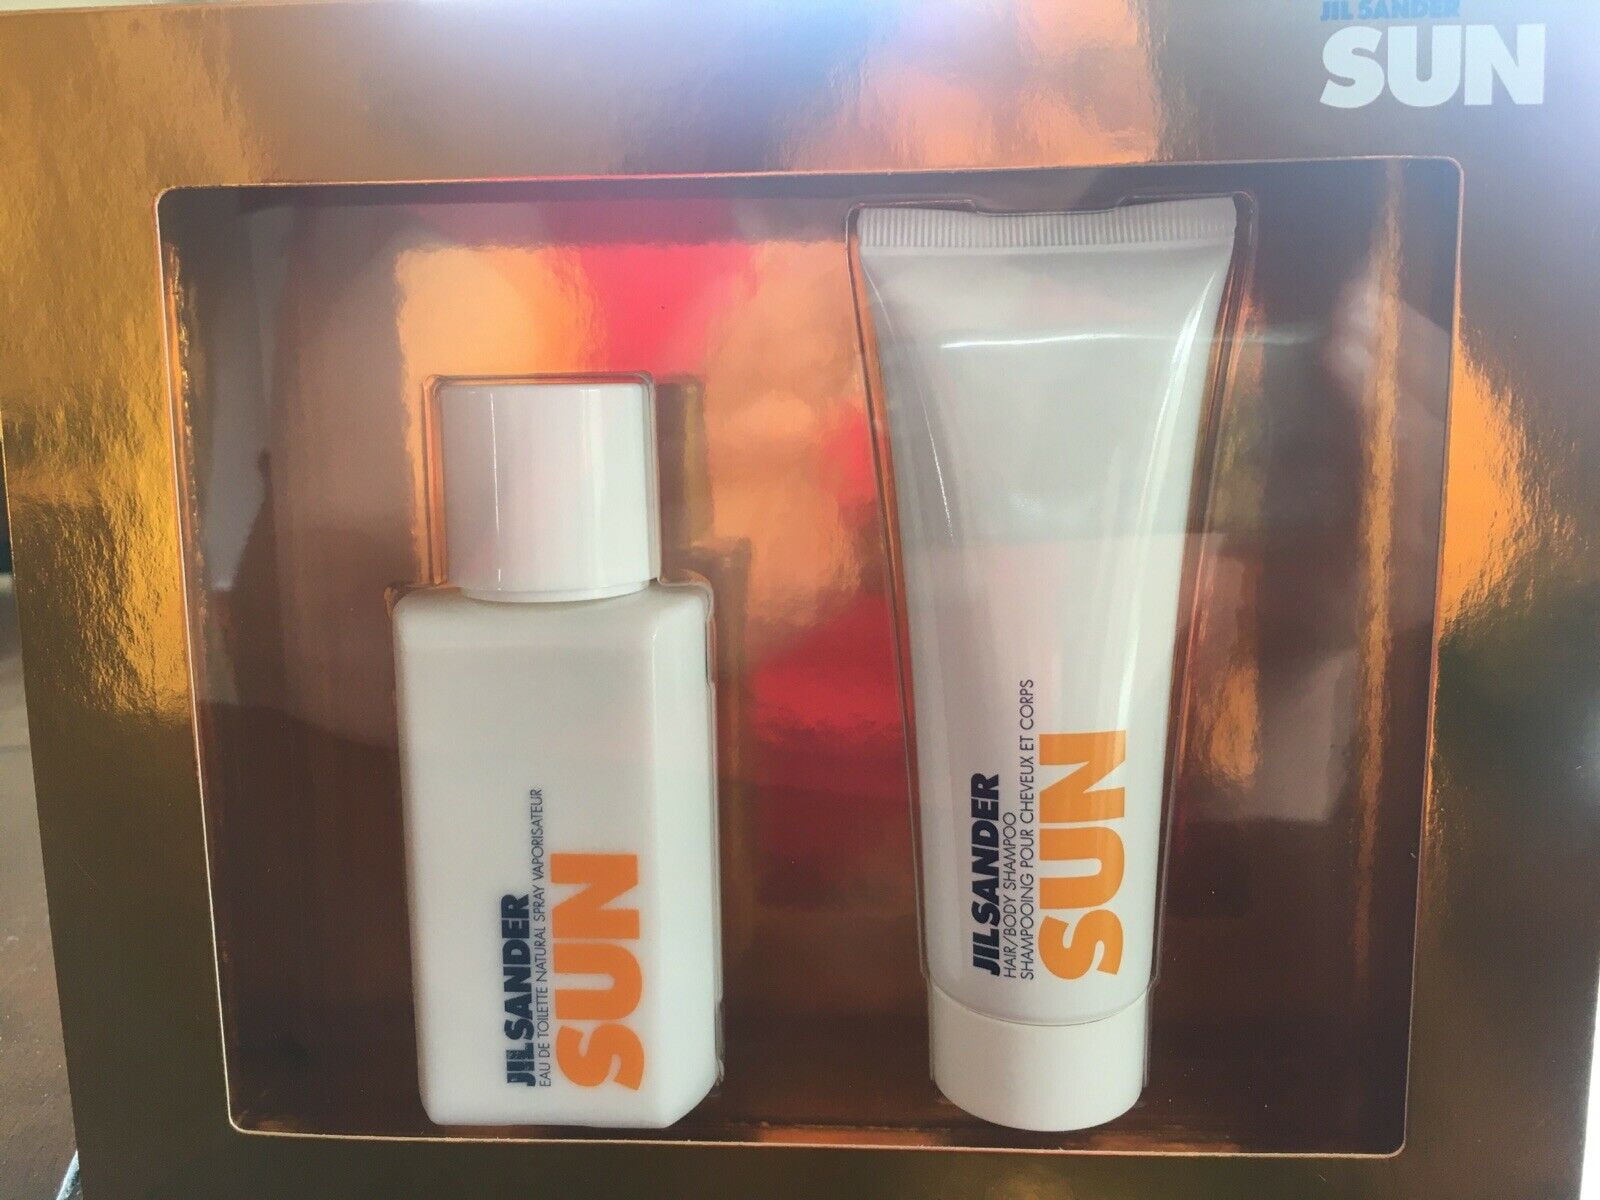 Jil Sander Sun 2.5oz / 75 ml Women\'s Perfume Eau de Toilette Spray, New  Gift Set